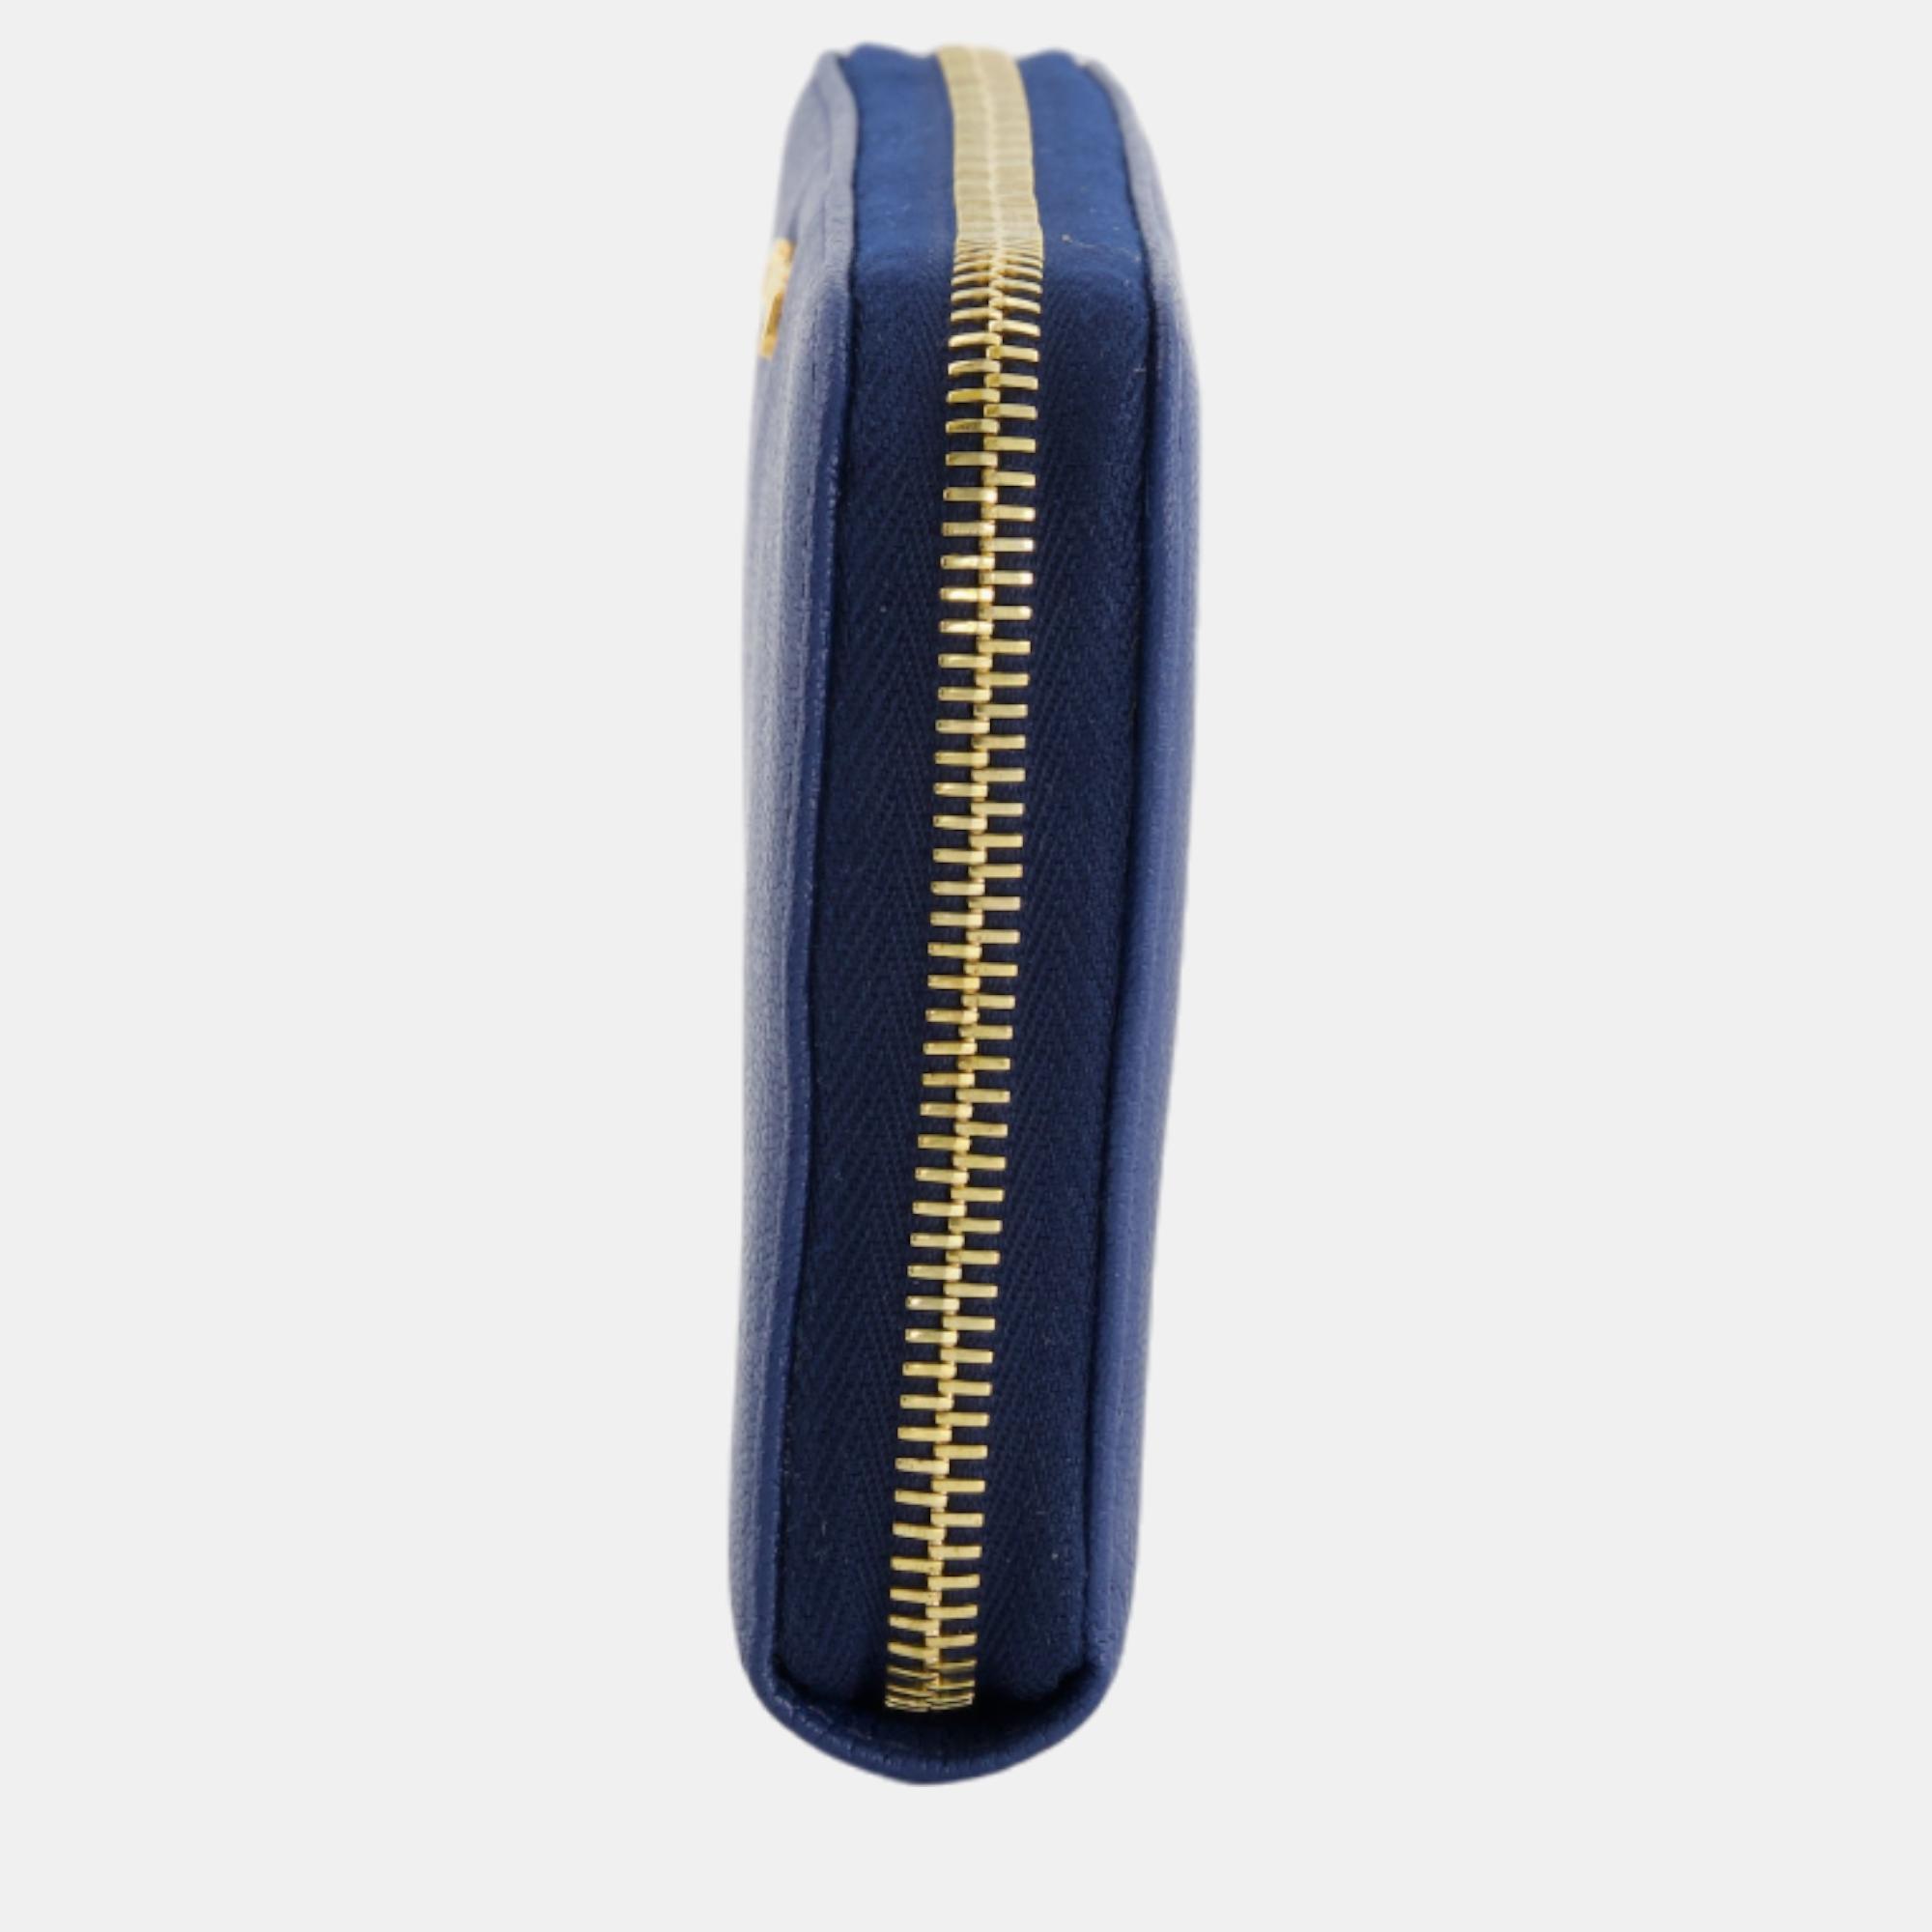 Miu Miu Navy Leather Zipped Wallet With Gold Logo